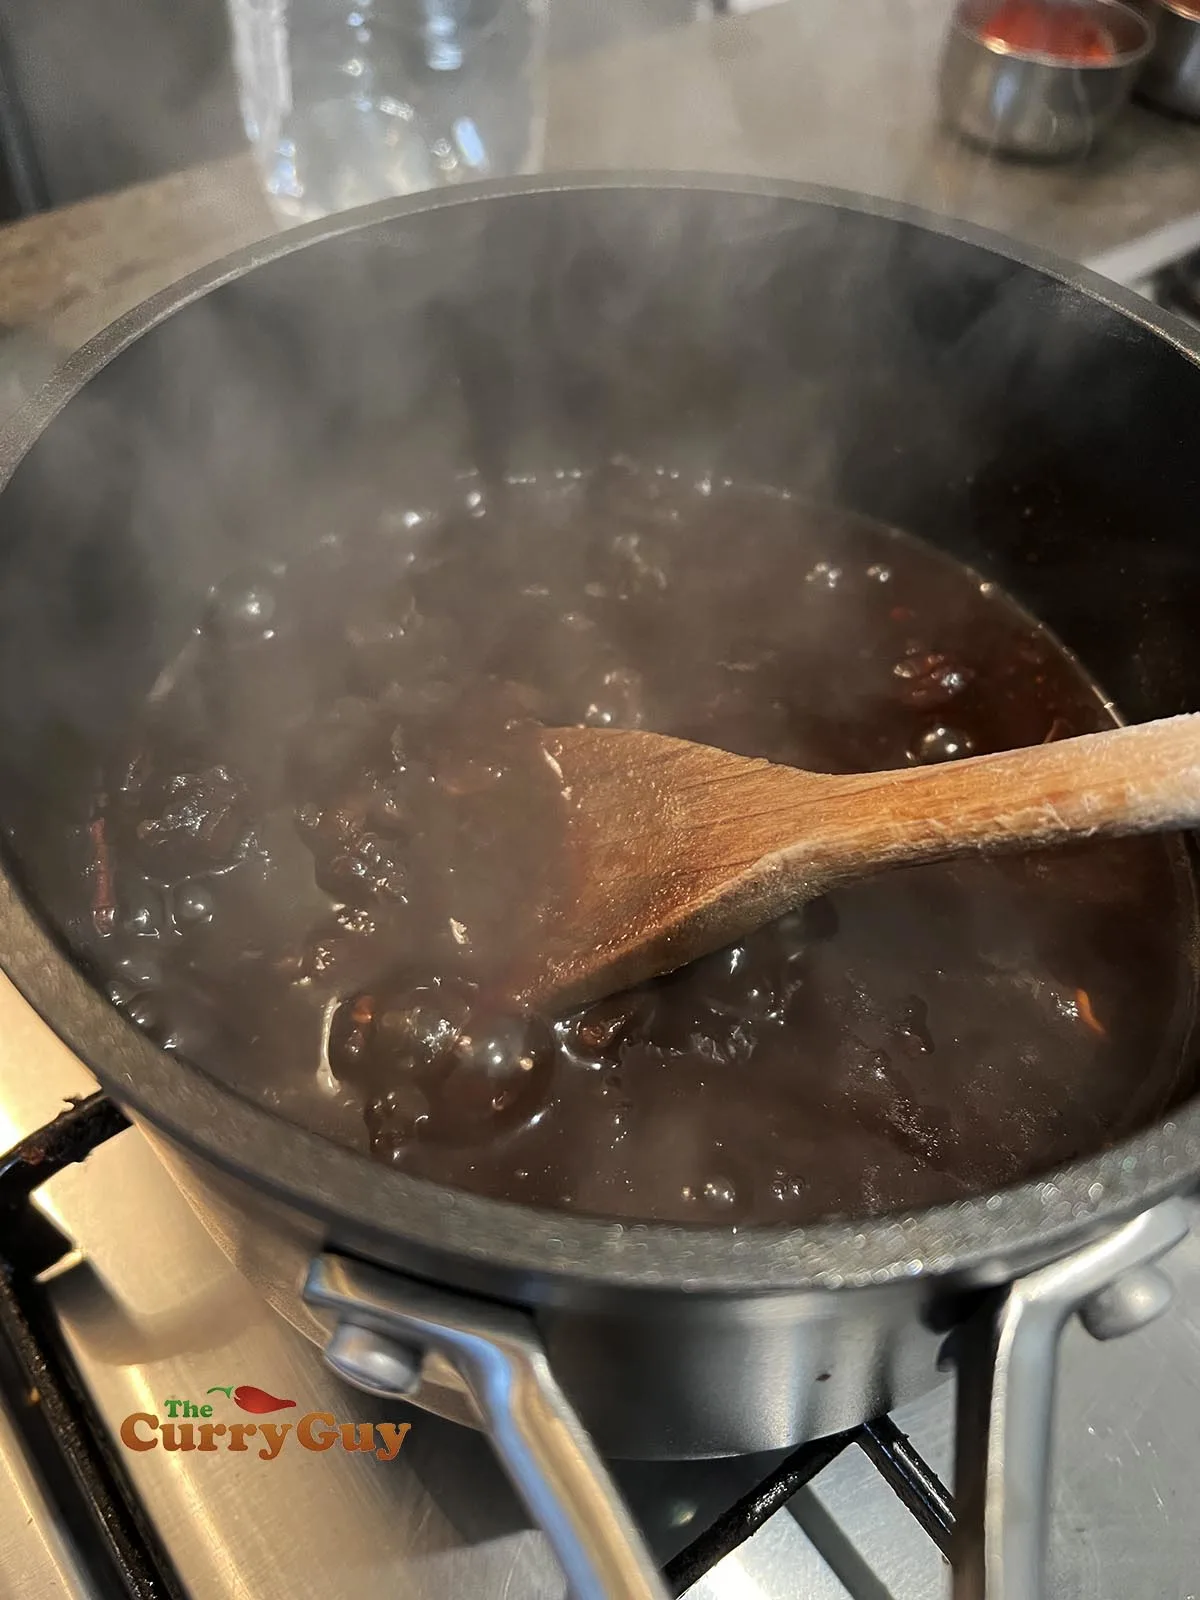 Breaking the tamarind down in the pan